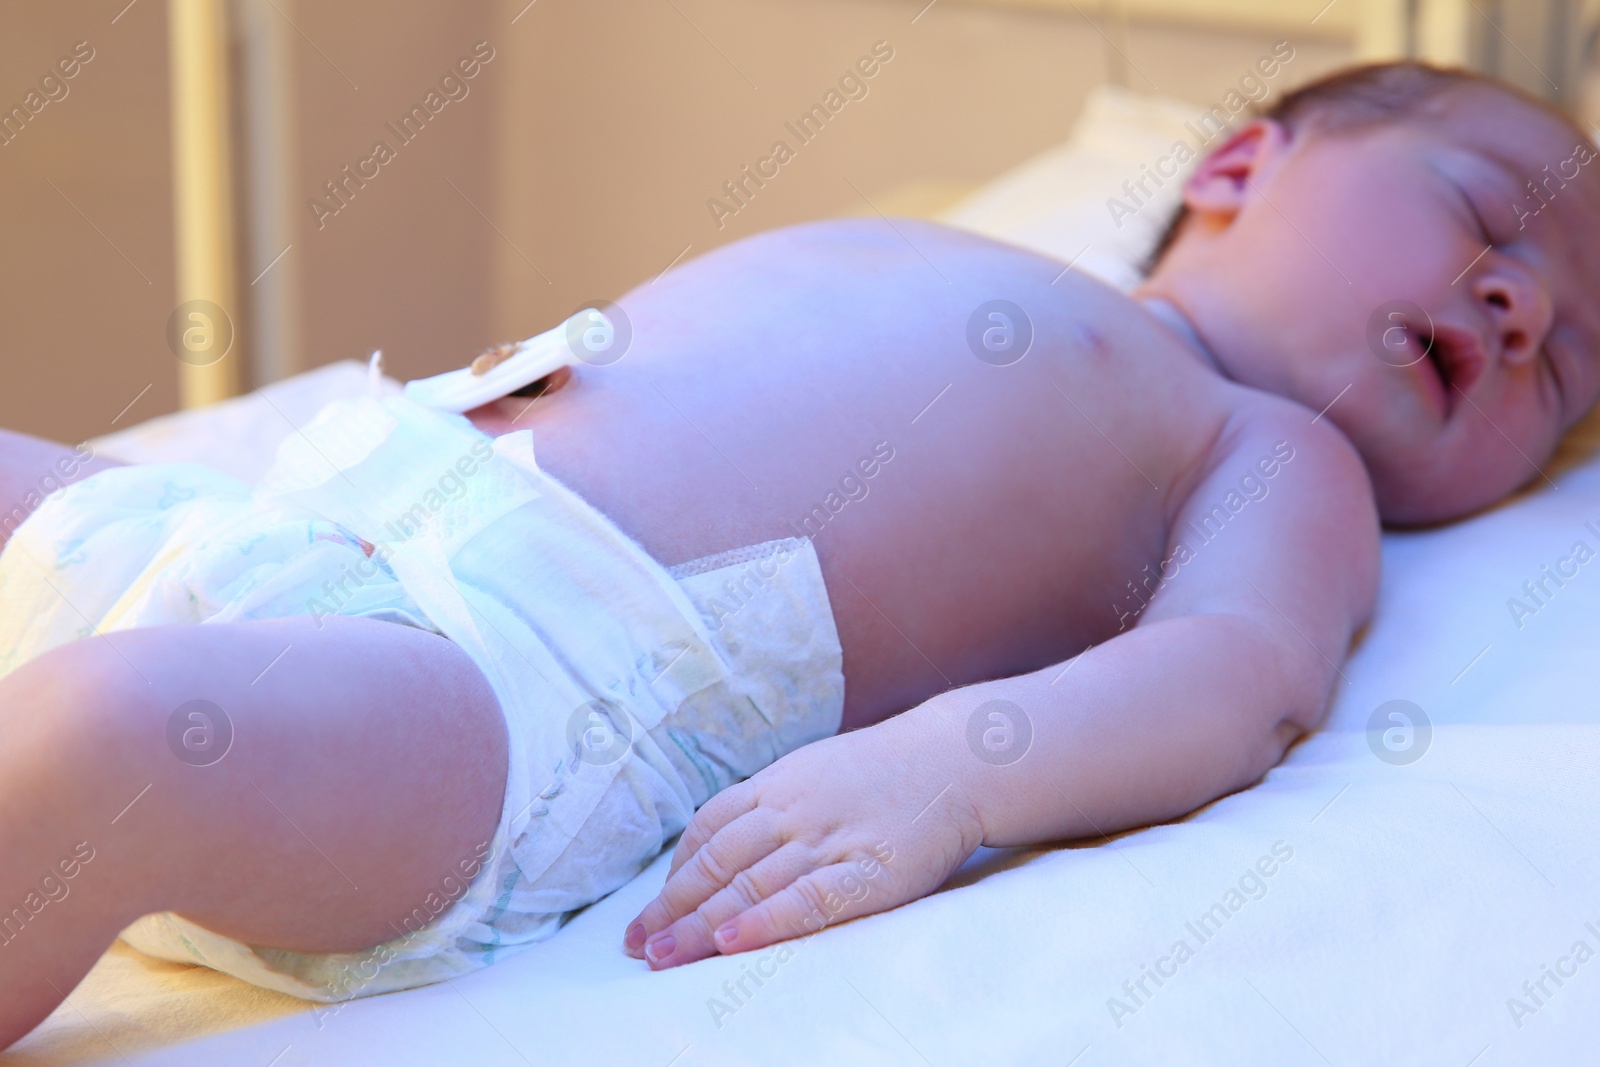 Photo of Newborn child under ultraviolet light in hospital